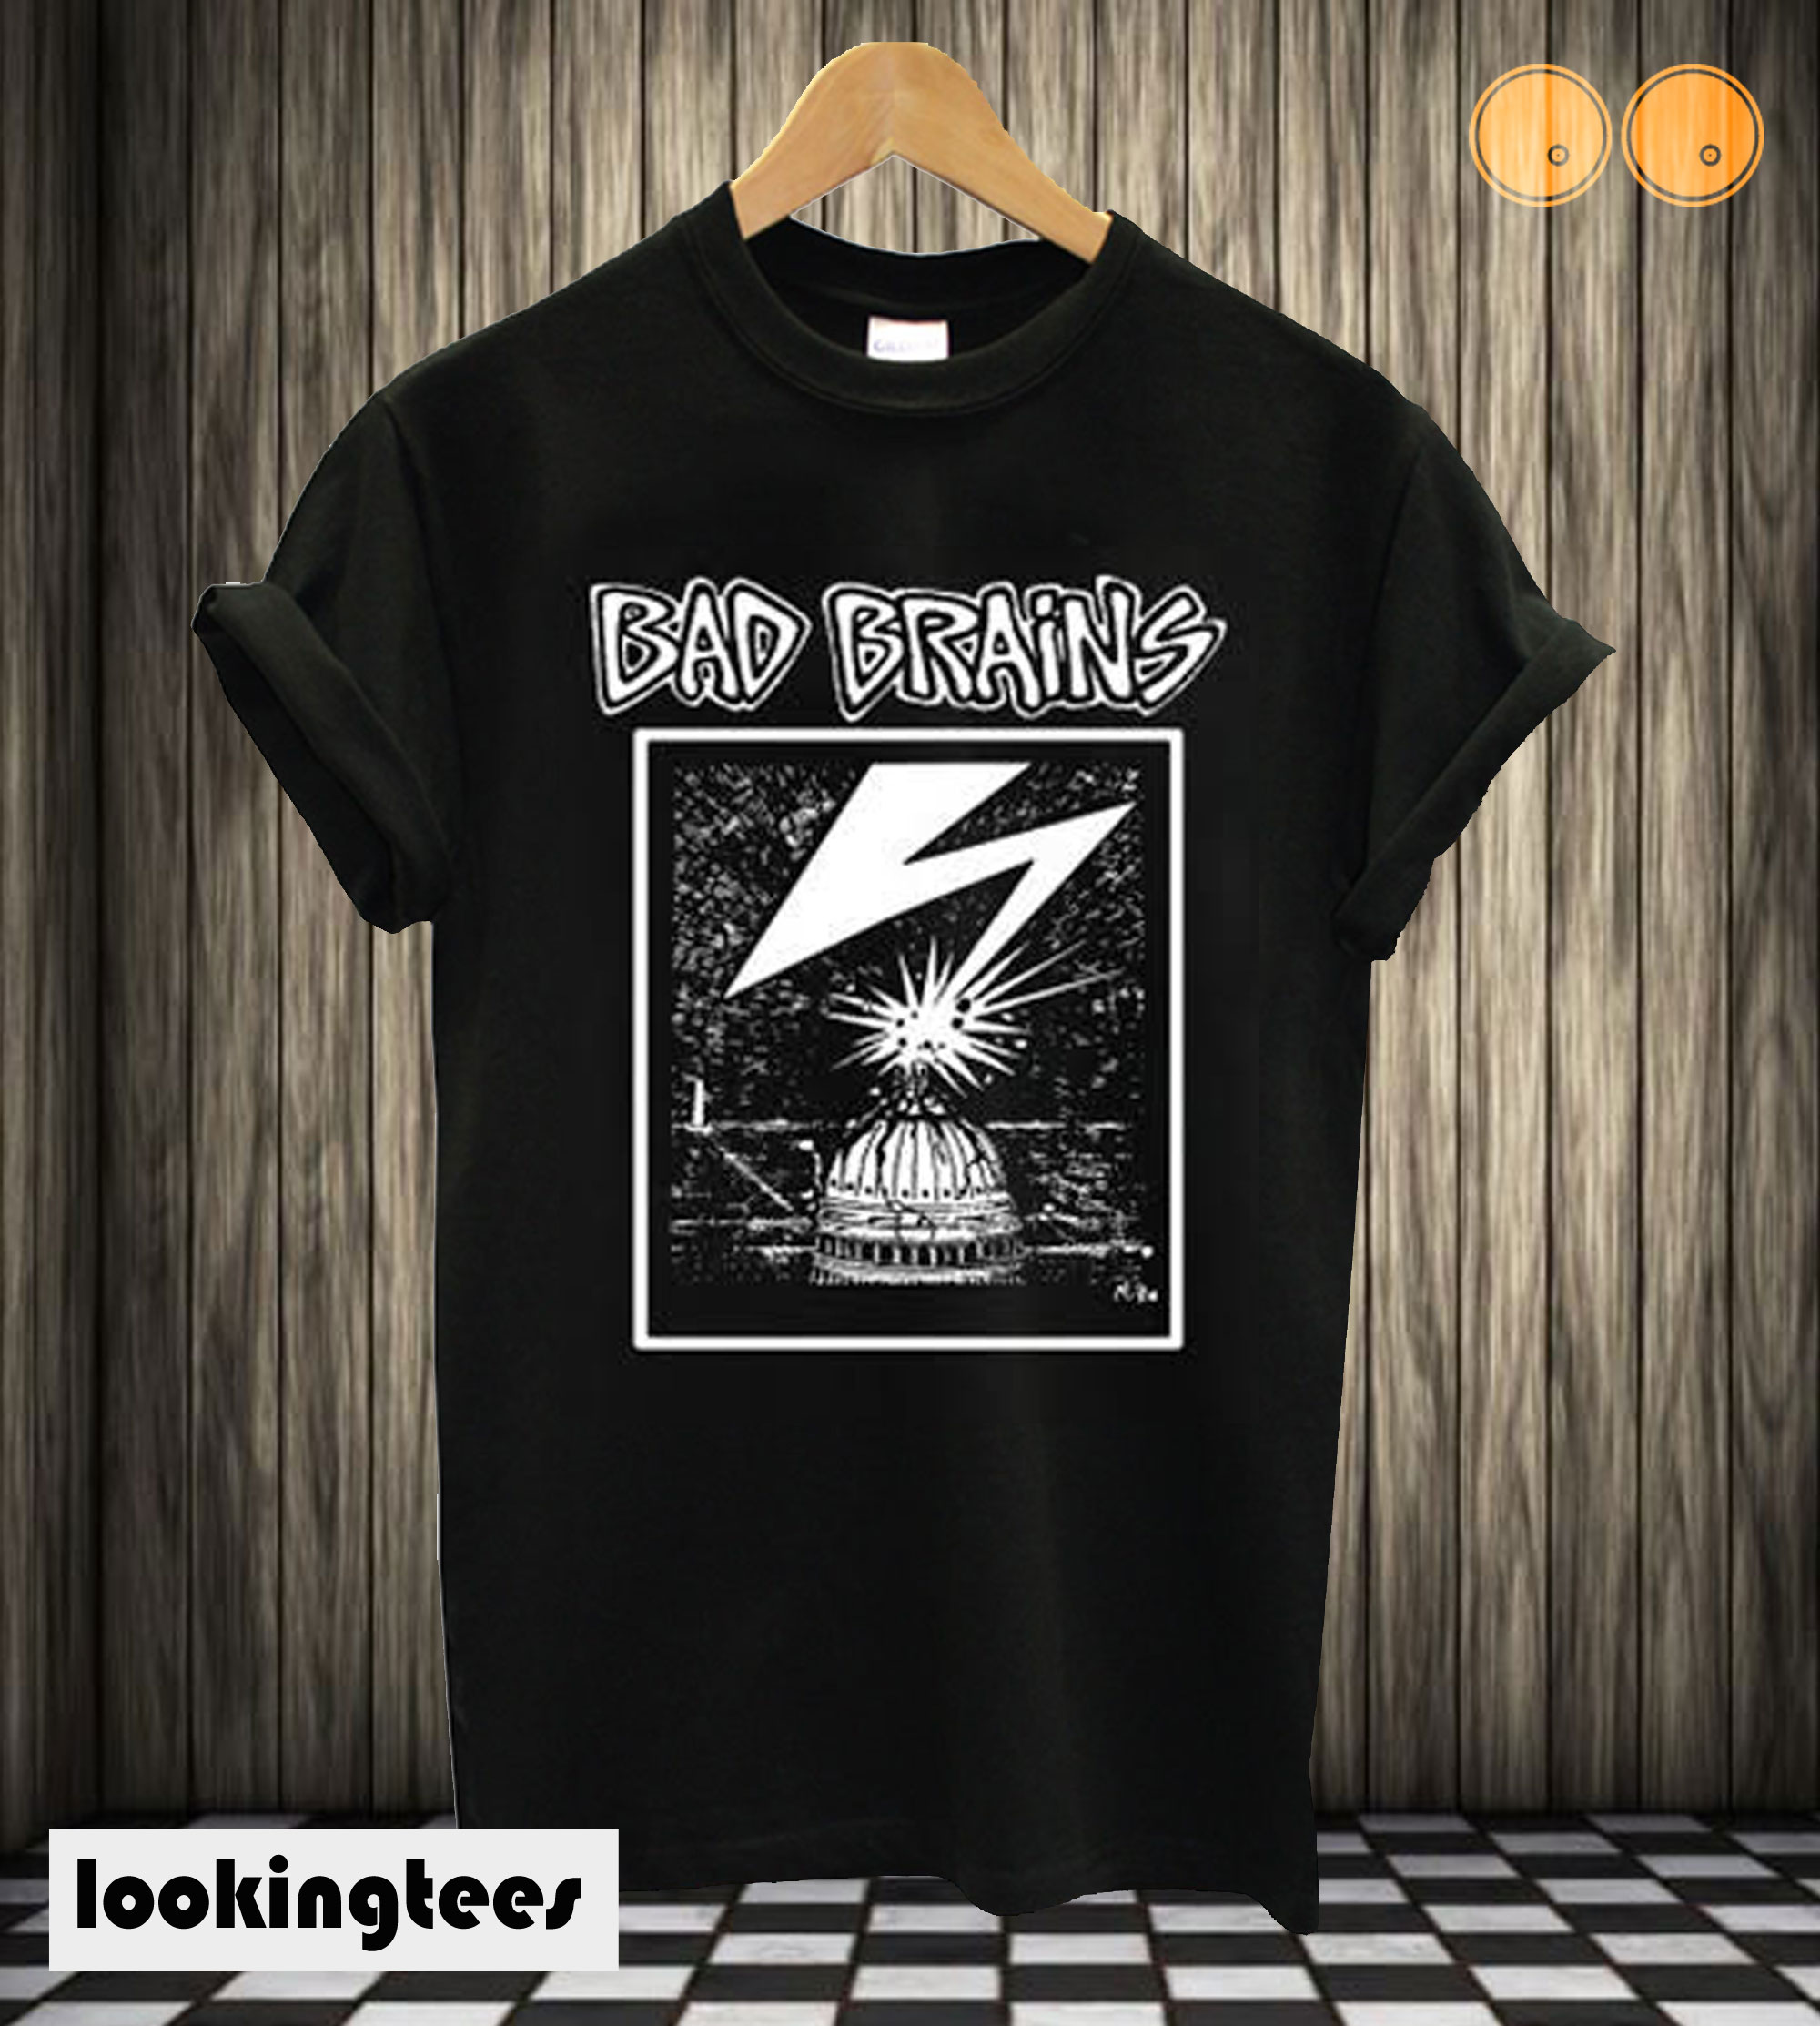 Bad Brains – Capitol White on Black T-shirt - Spitefun